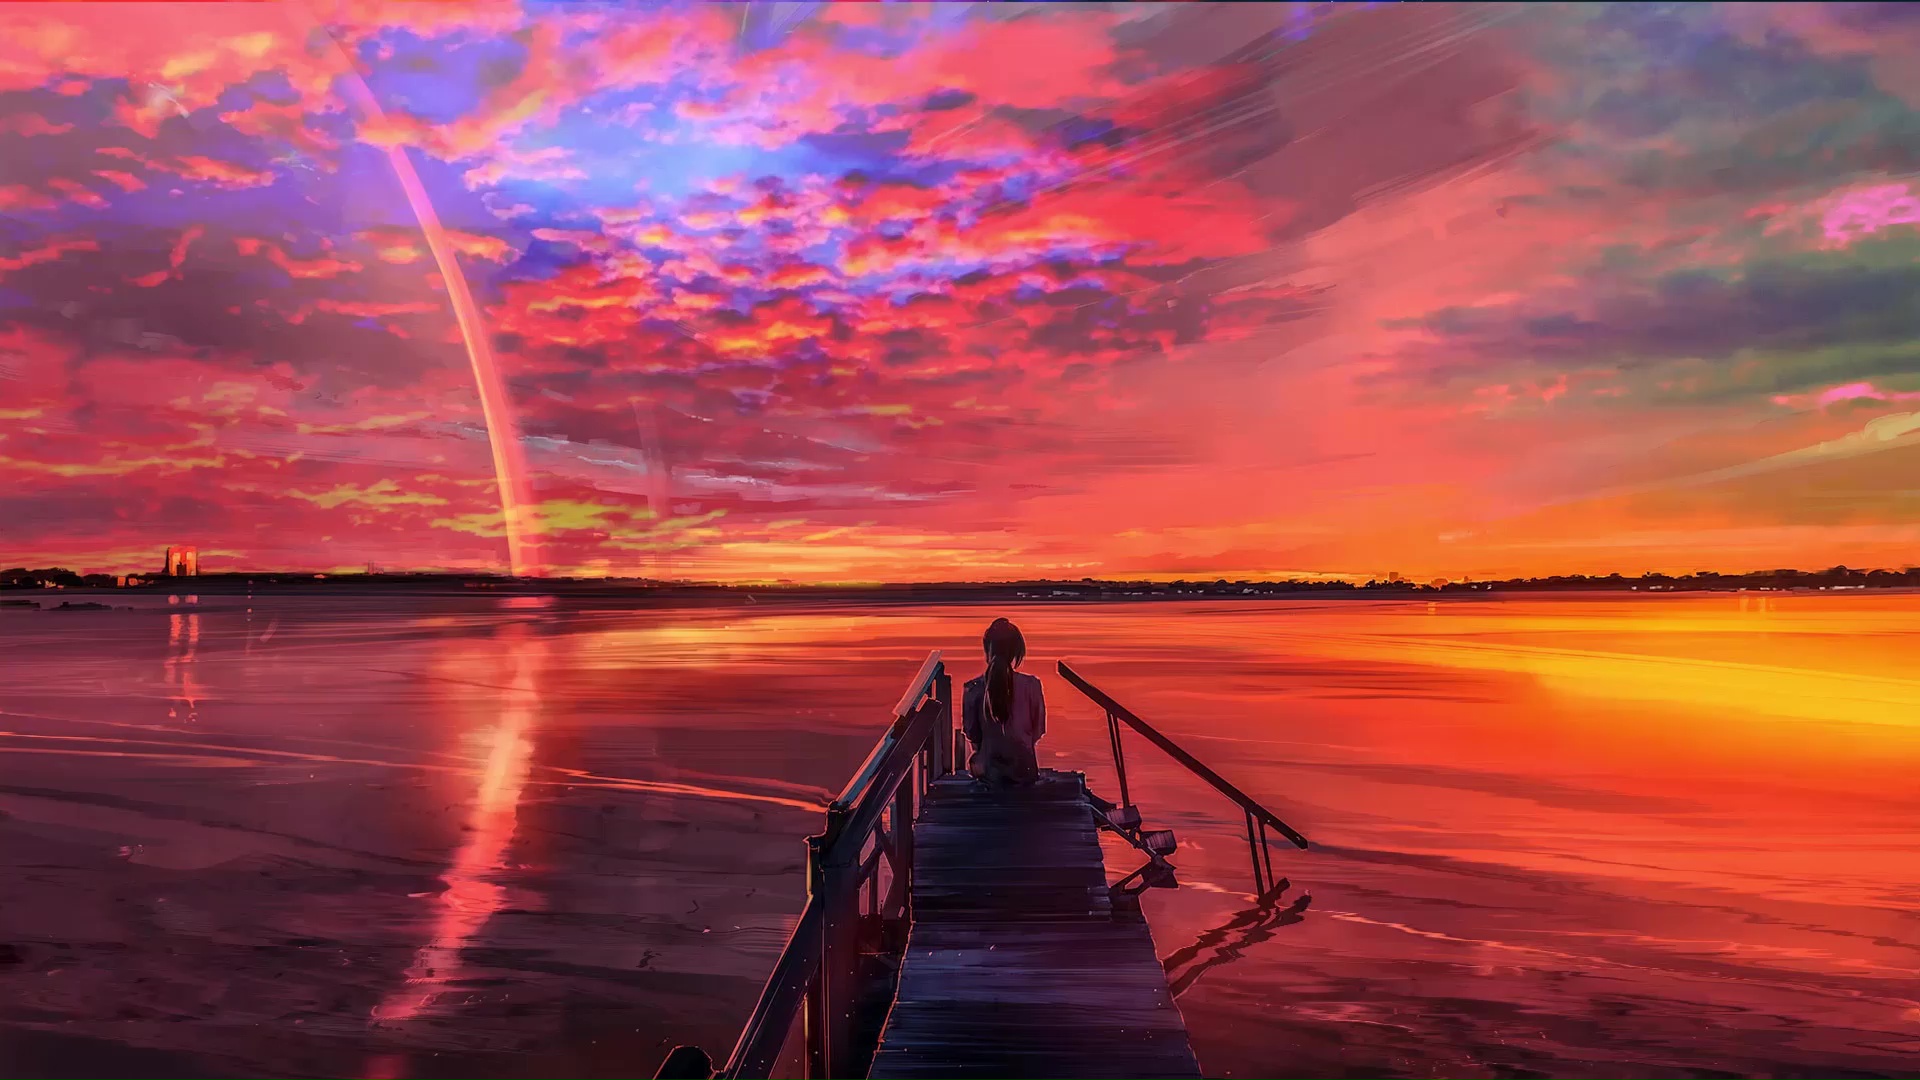 Anime Girl Sitting On The Bridge Watching The Sunset Live Wallpaper -  MoeWalls